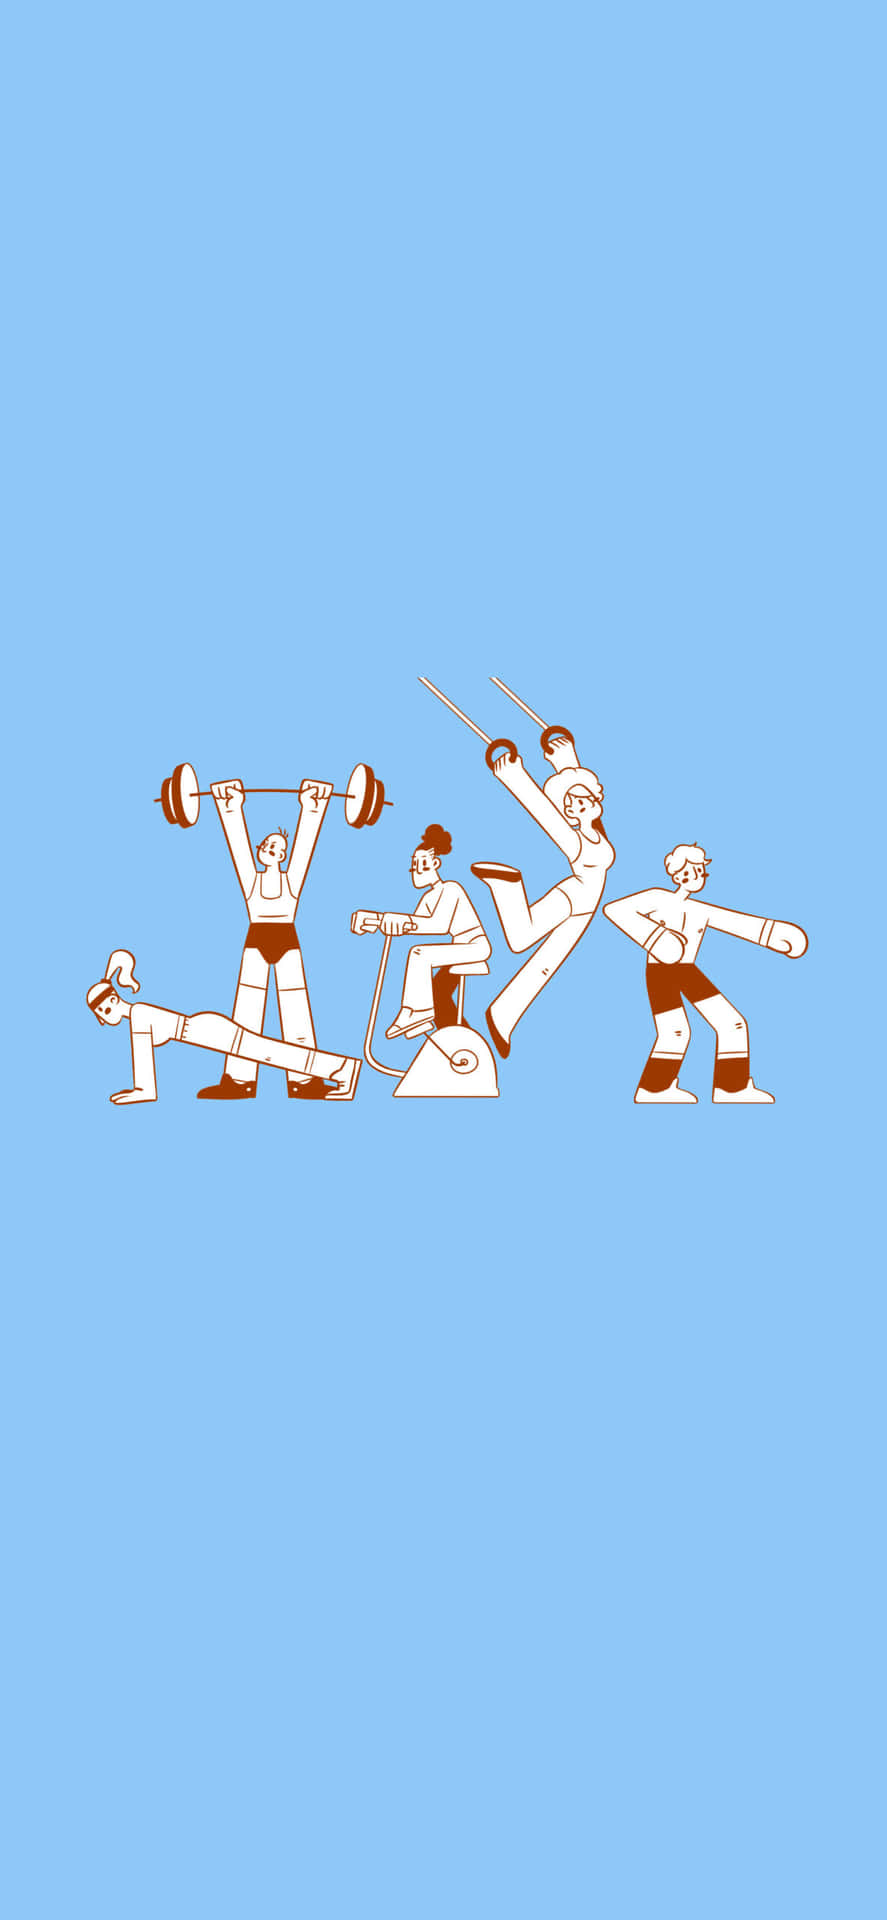 Retro Style Workout Illustration Wallpaper